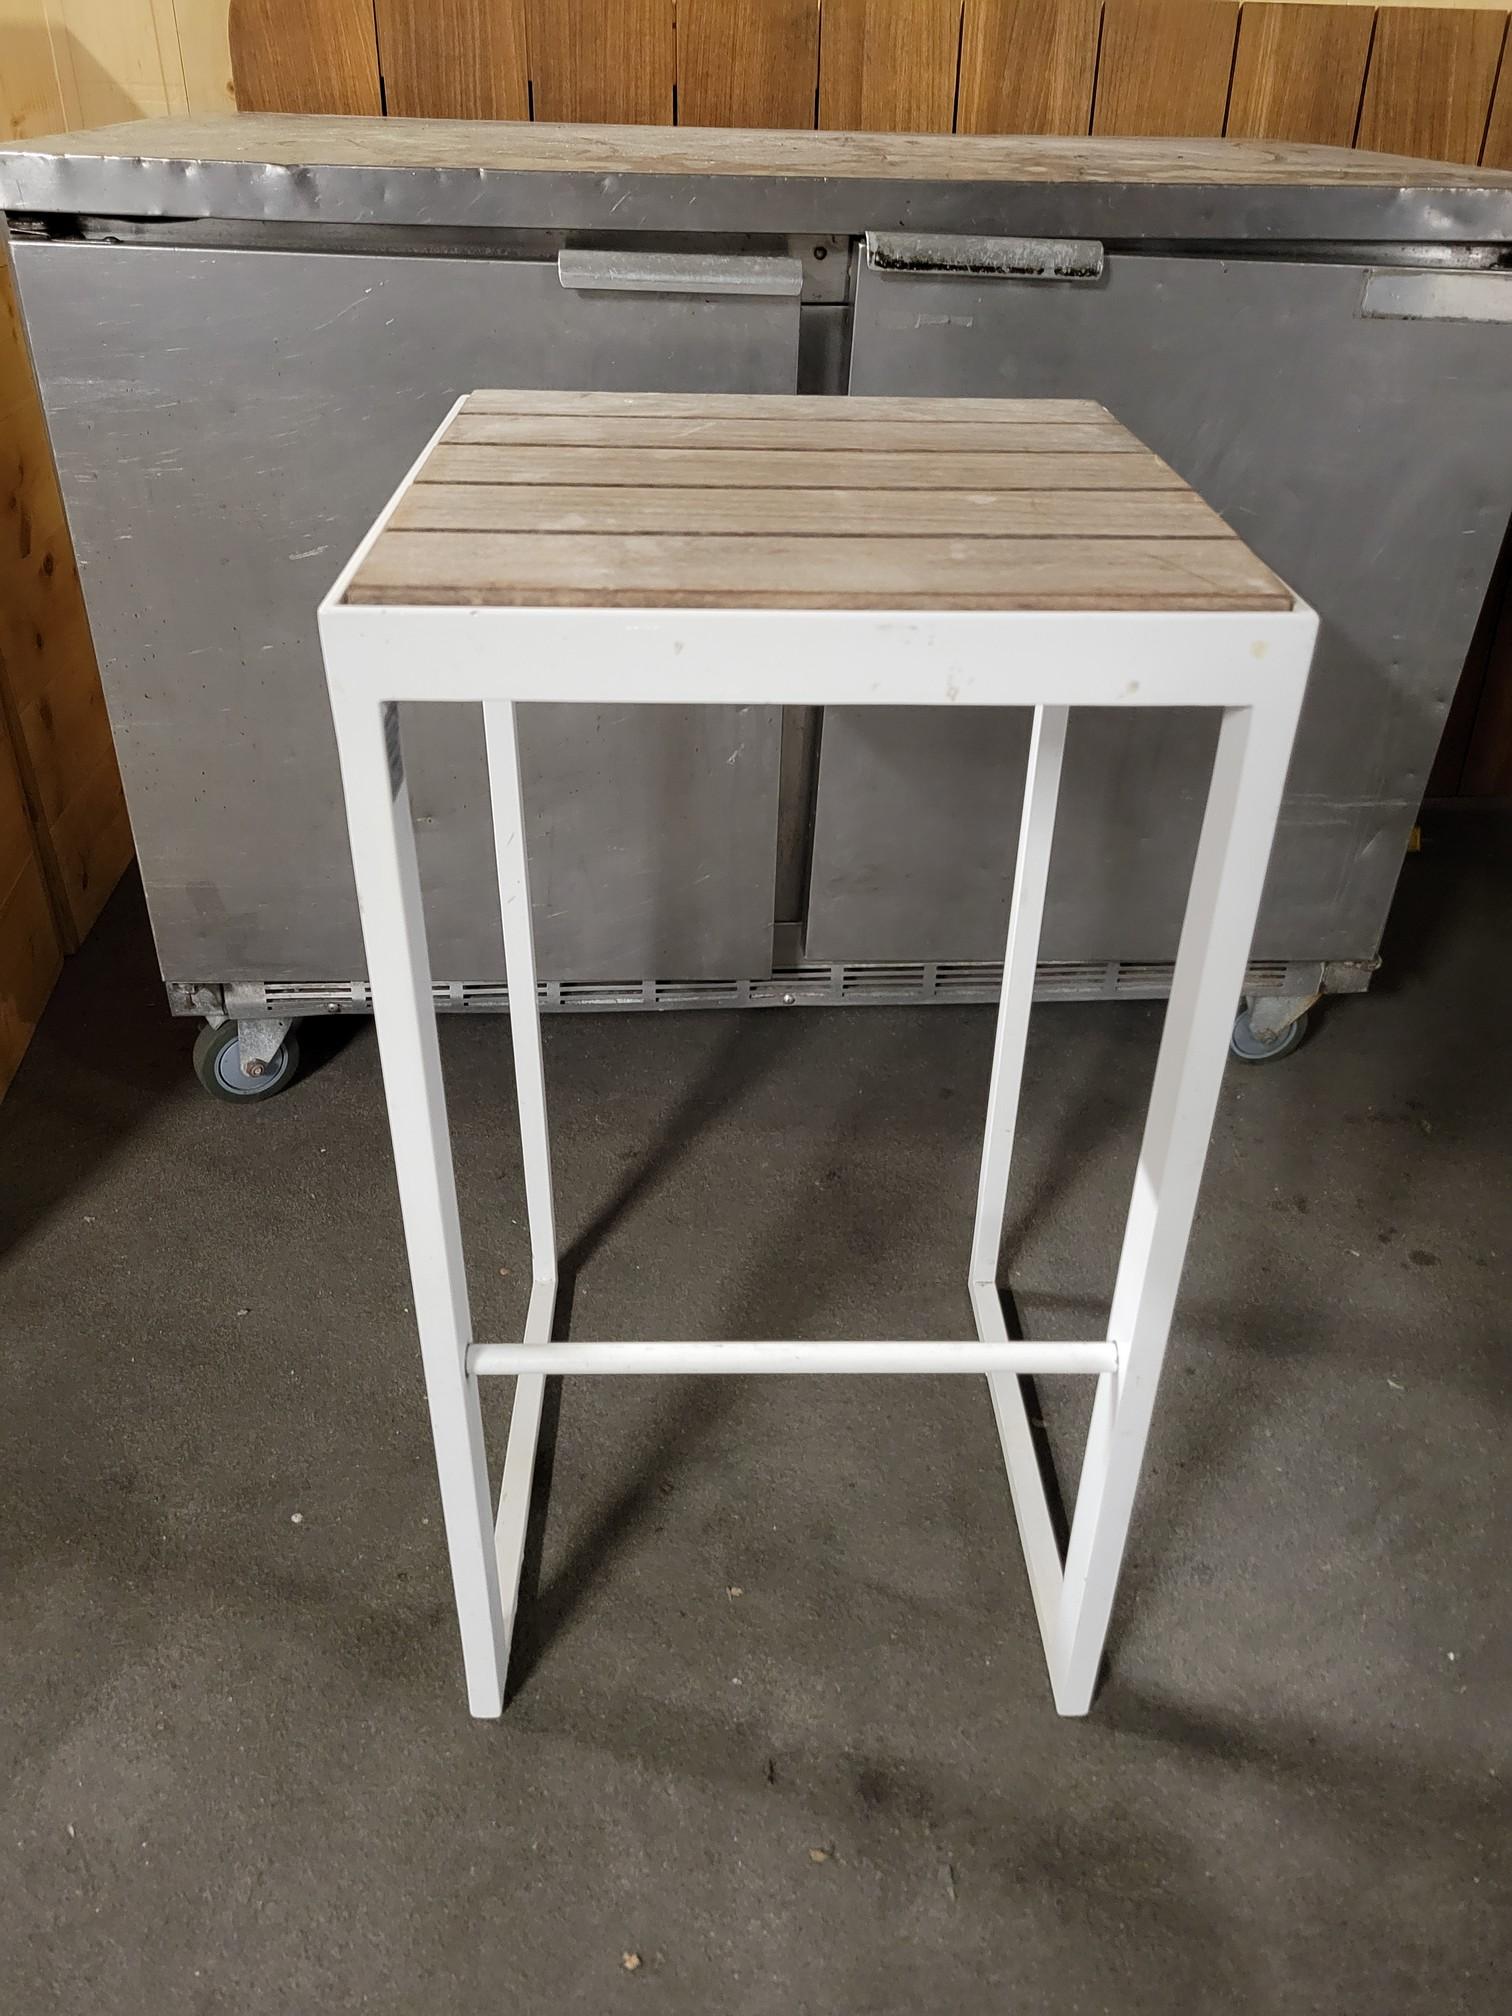 16" x 16" Wood and Metal Table